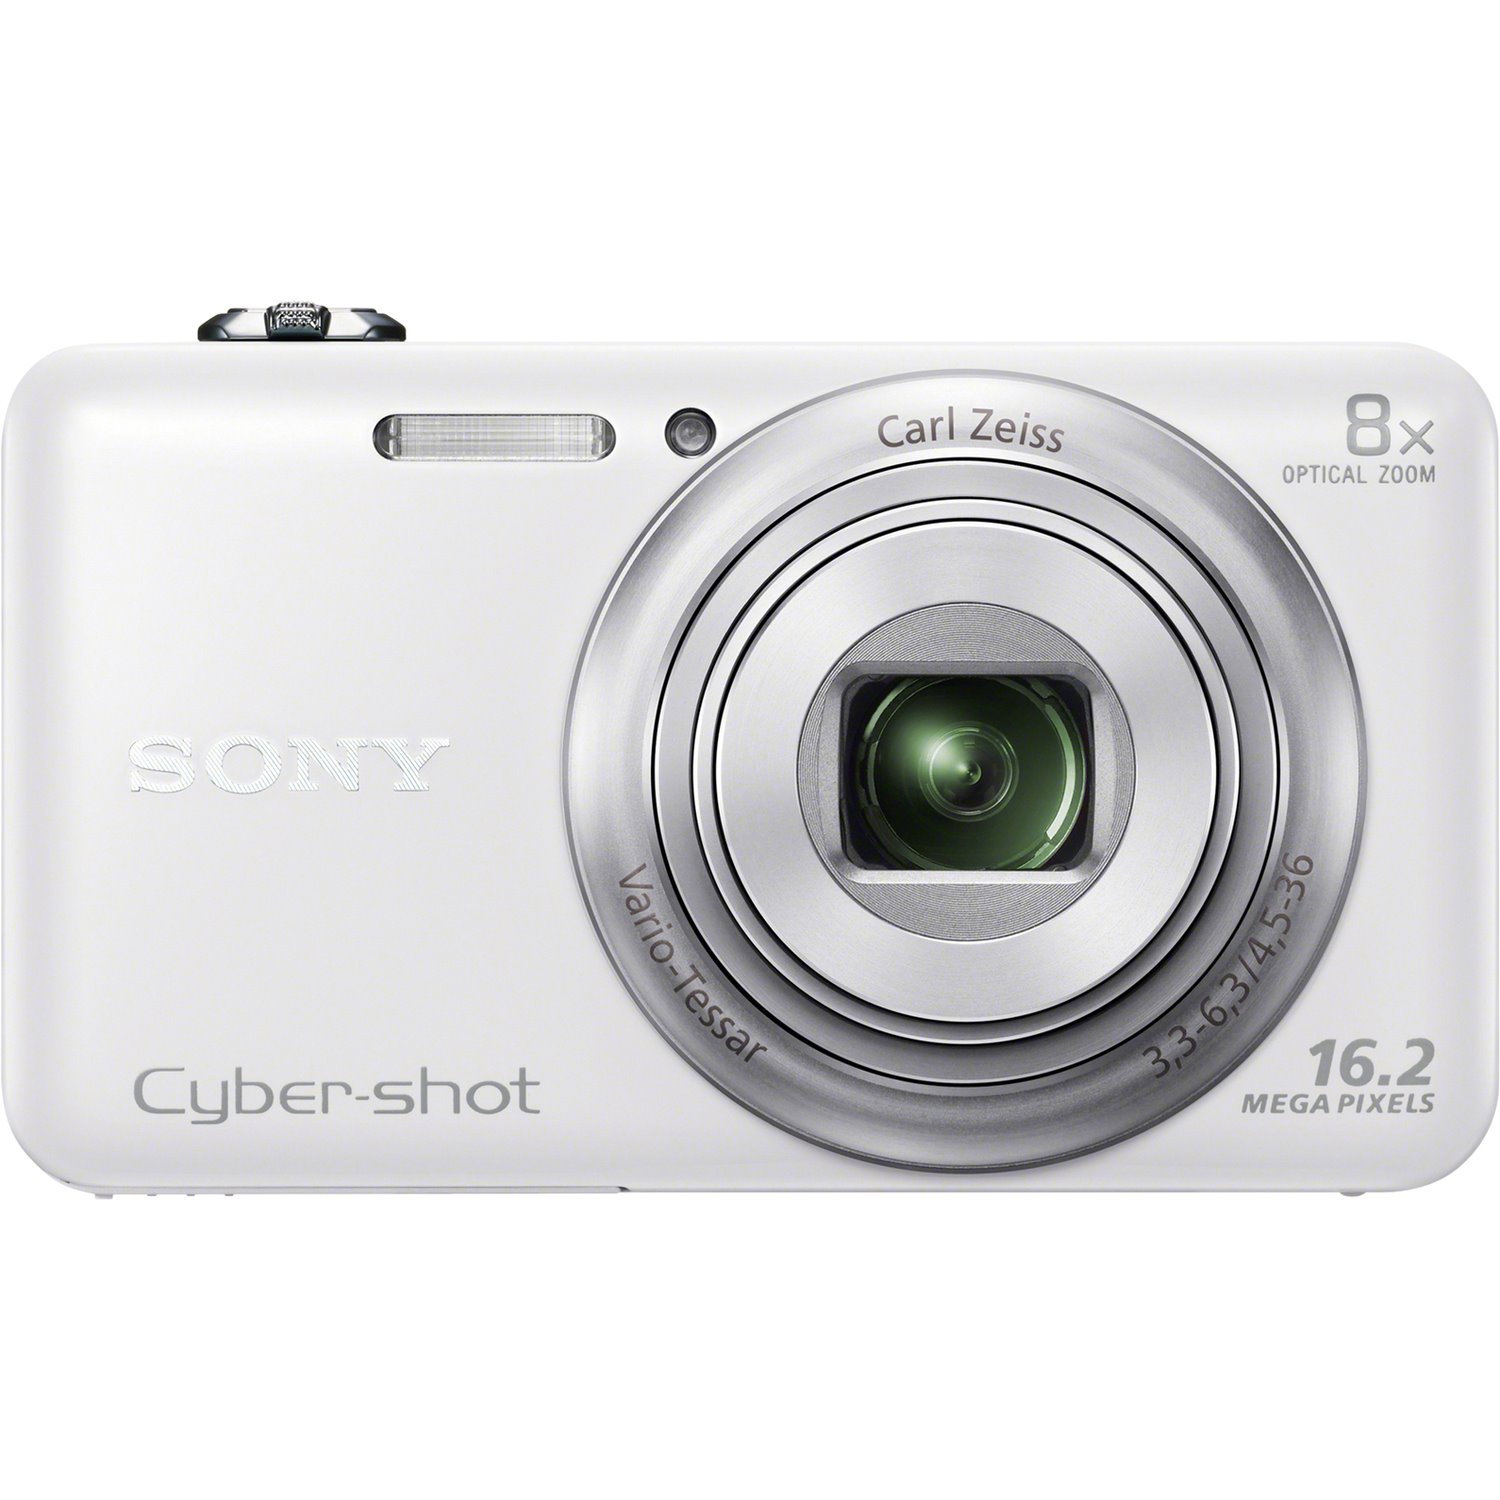 Sony Cyber-shot DSC-WX80 16.2 Megapixel Compact Camera - White